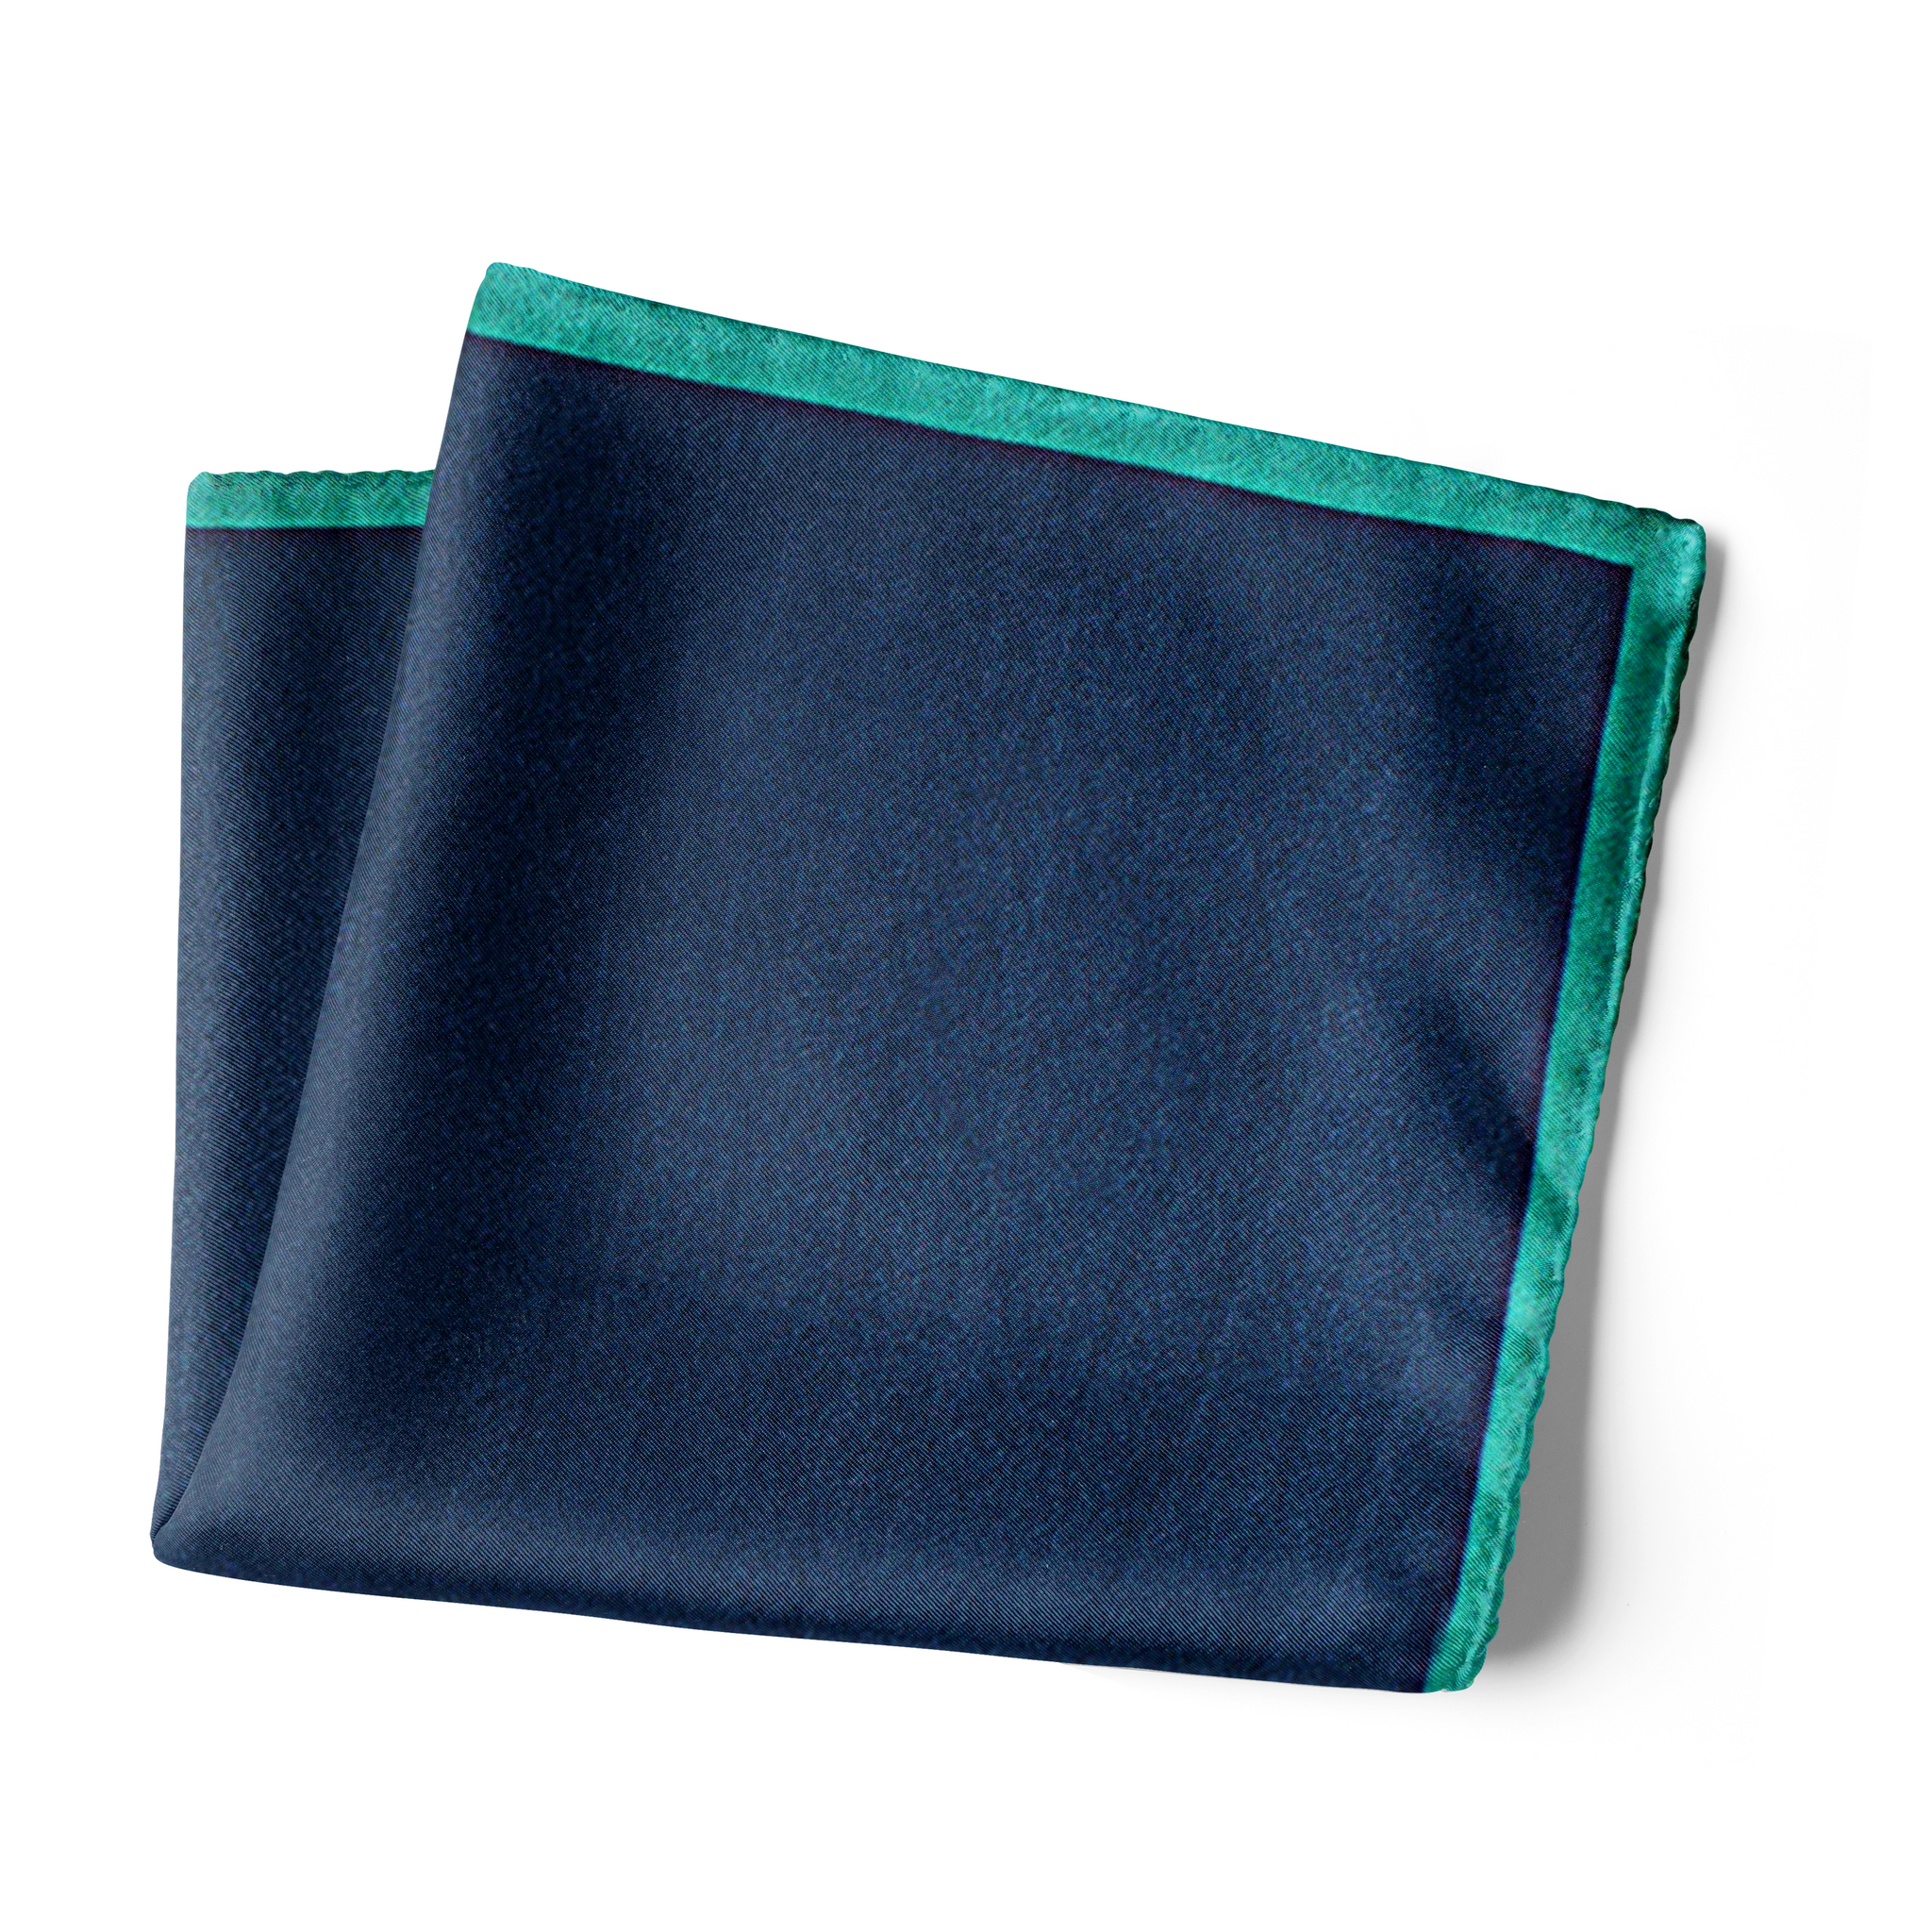 Chokore Blue & Green Pure Silk Pocket Square